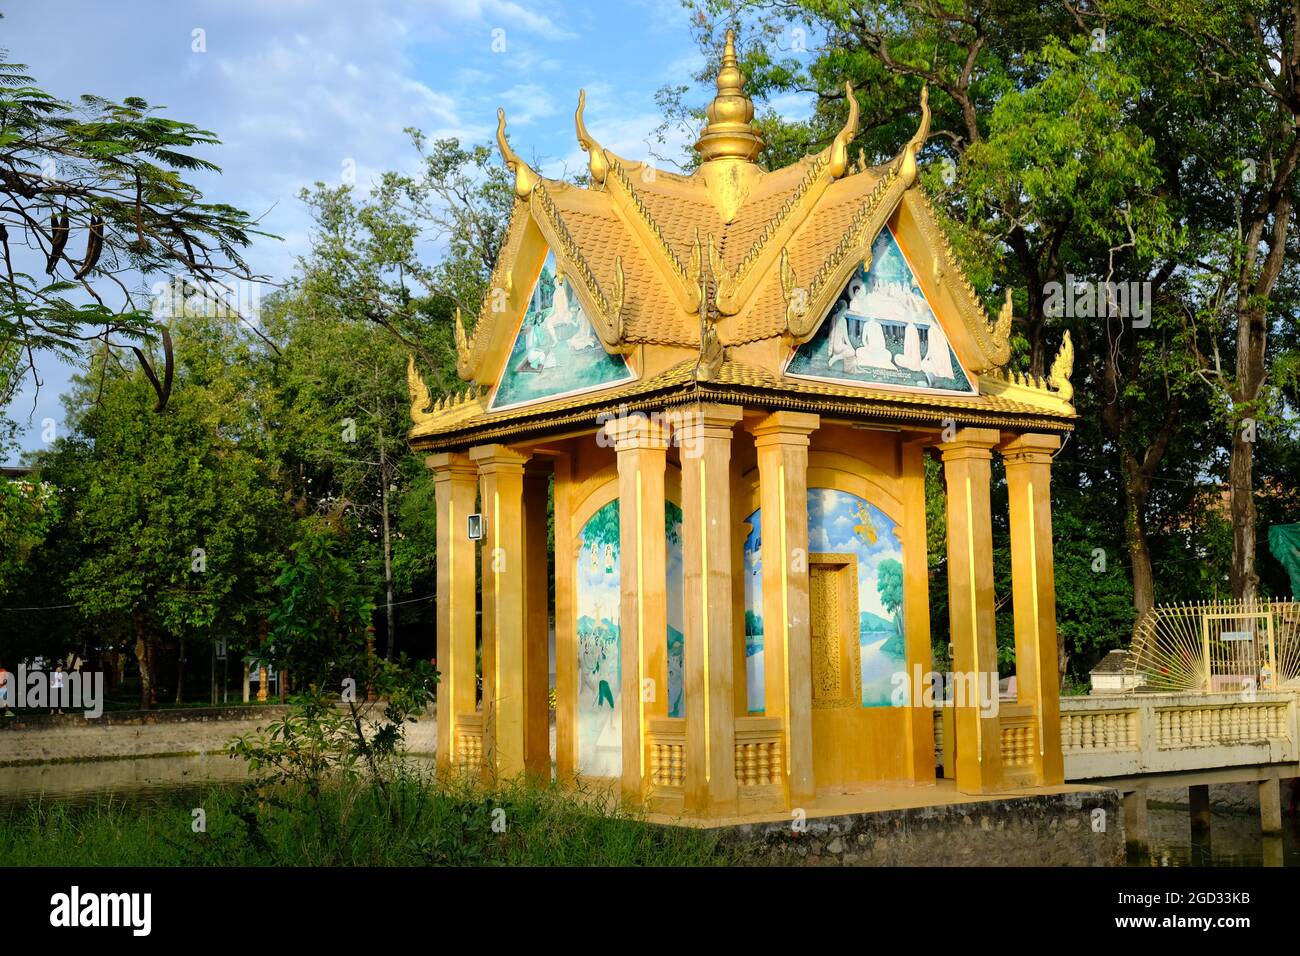 Cambodia Krong Siem Reap - Wat Damnak golden Sala - golden Pavilion Stock Photo